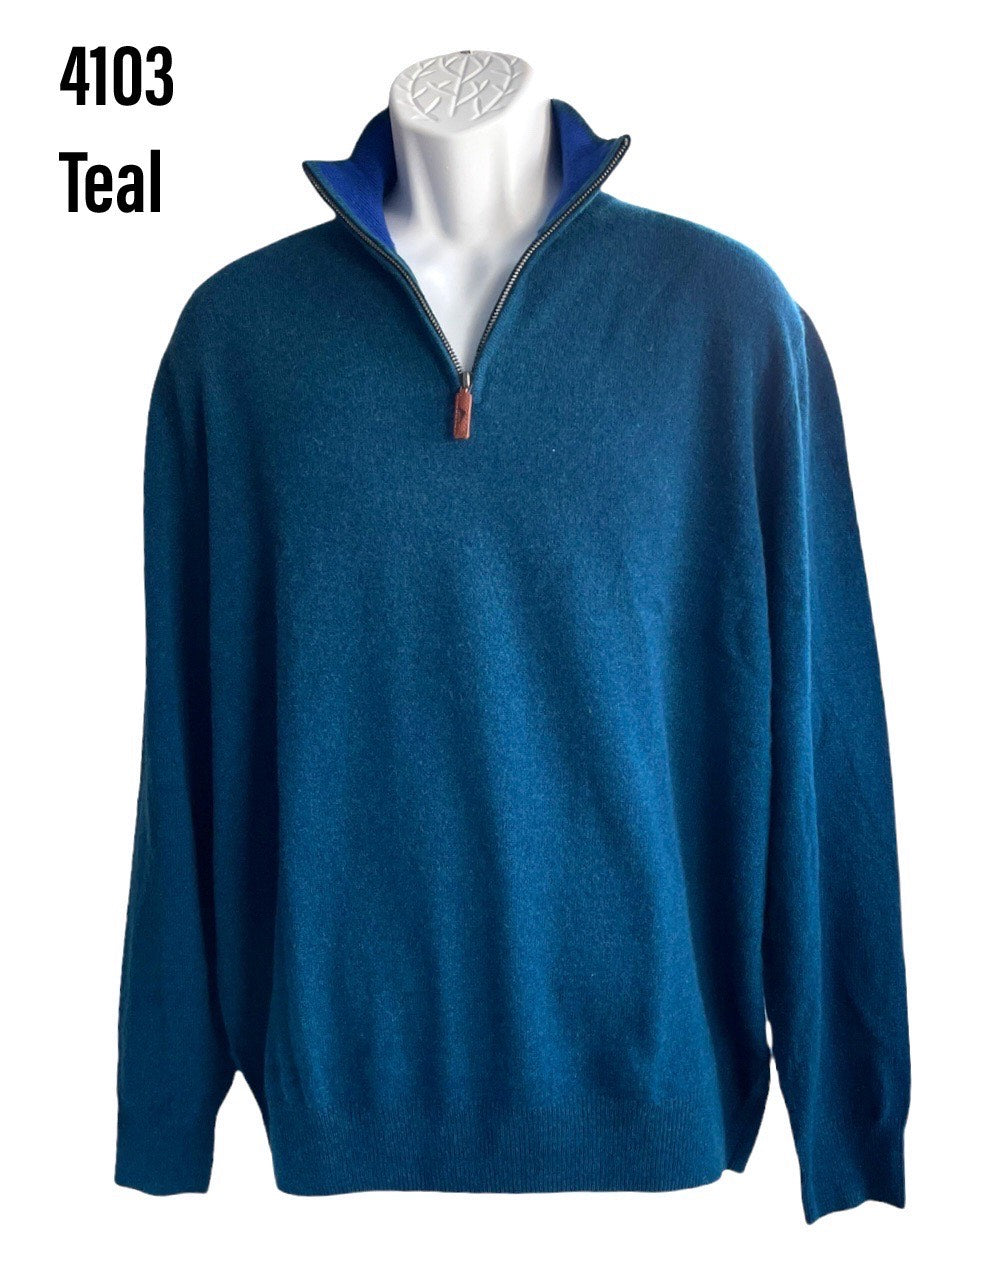 Men's Cashmere Quarter Zip Sweater #4103